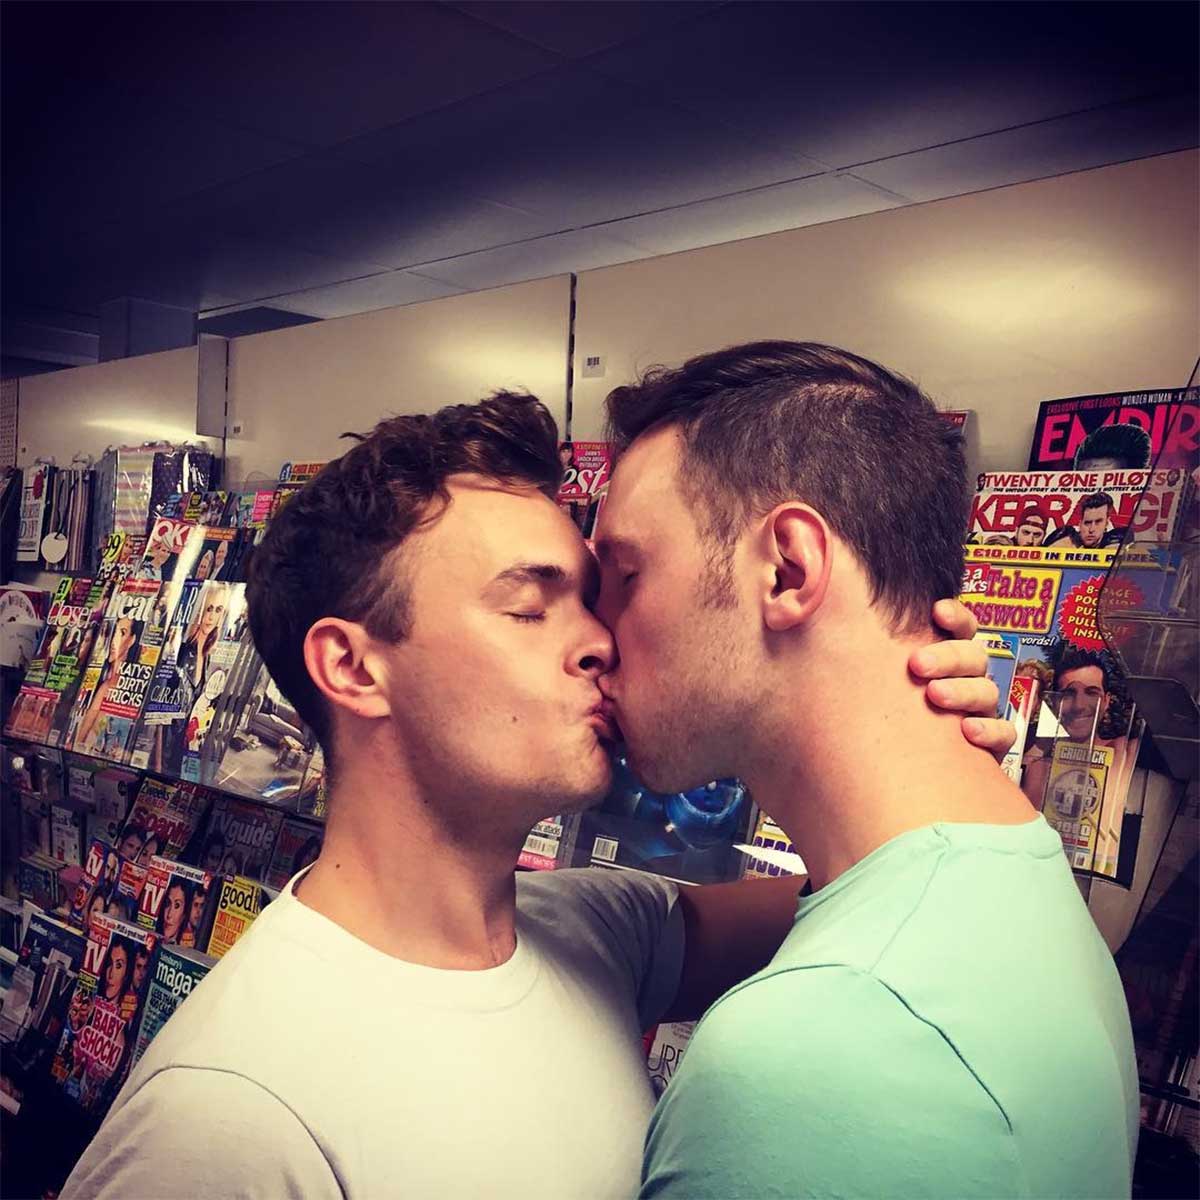 Big Gay Kiss-in Sainsbury's supermarché